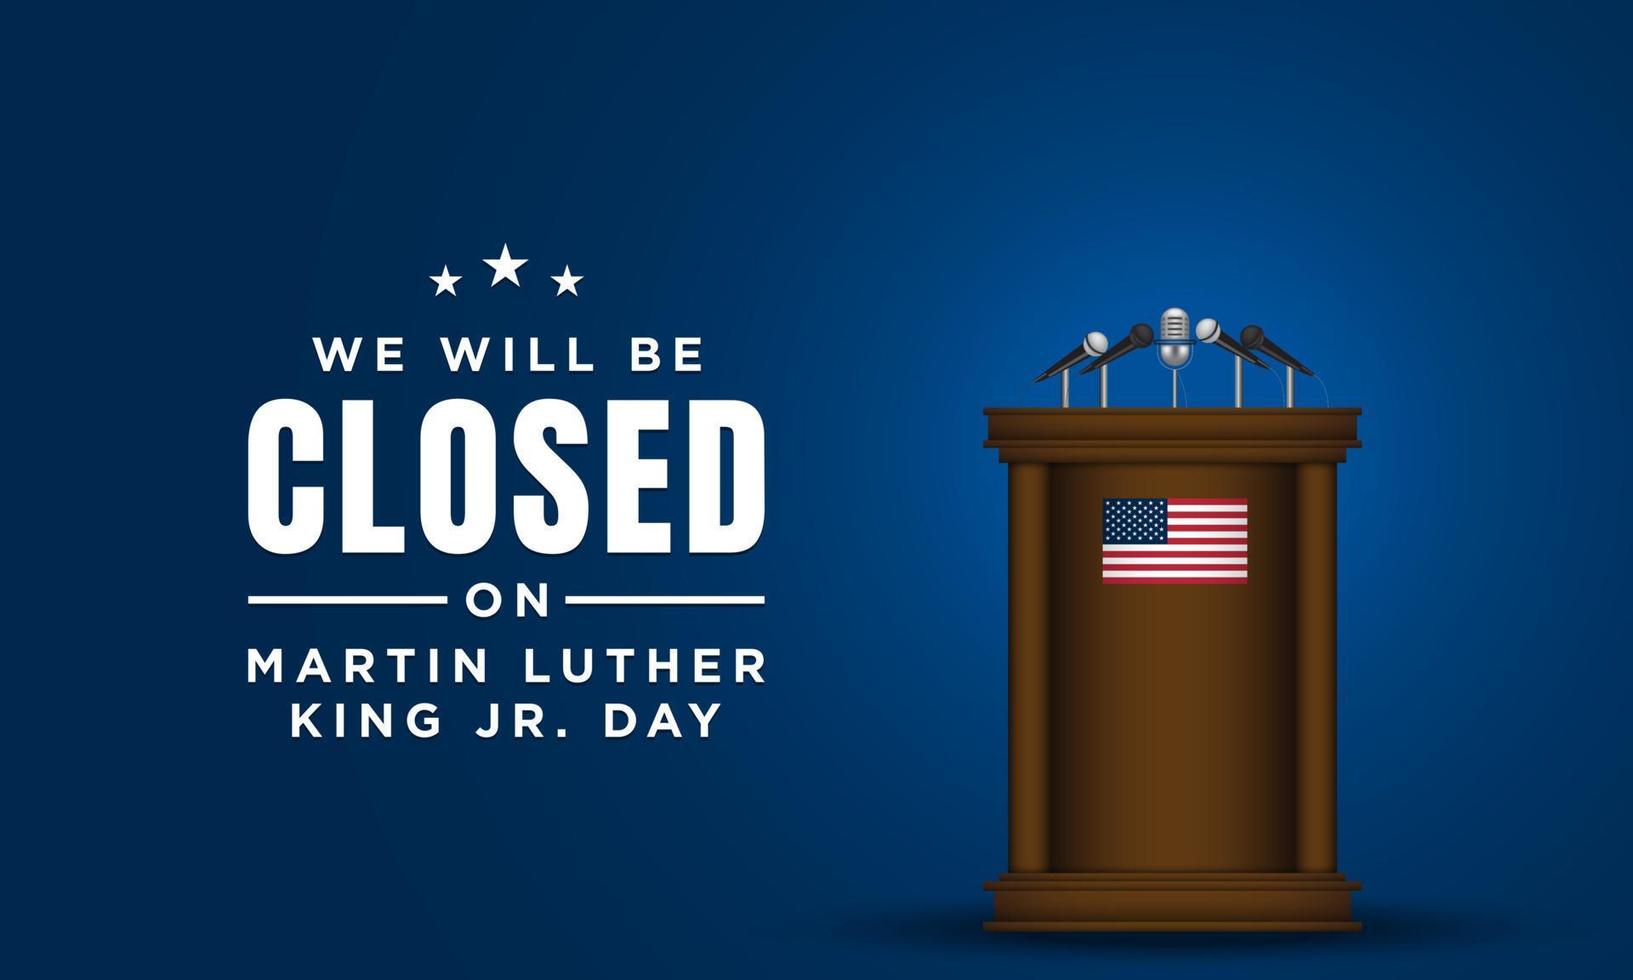 Vektor-Illustration von Martin Luther King jr. Tag Hintergrund. geschlossen am martin luther king jr. Tag vektor